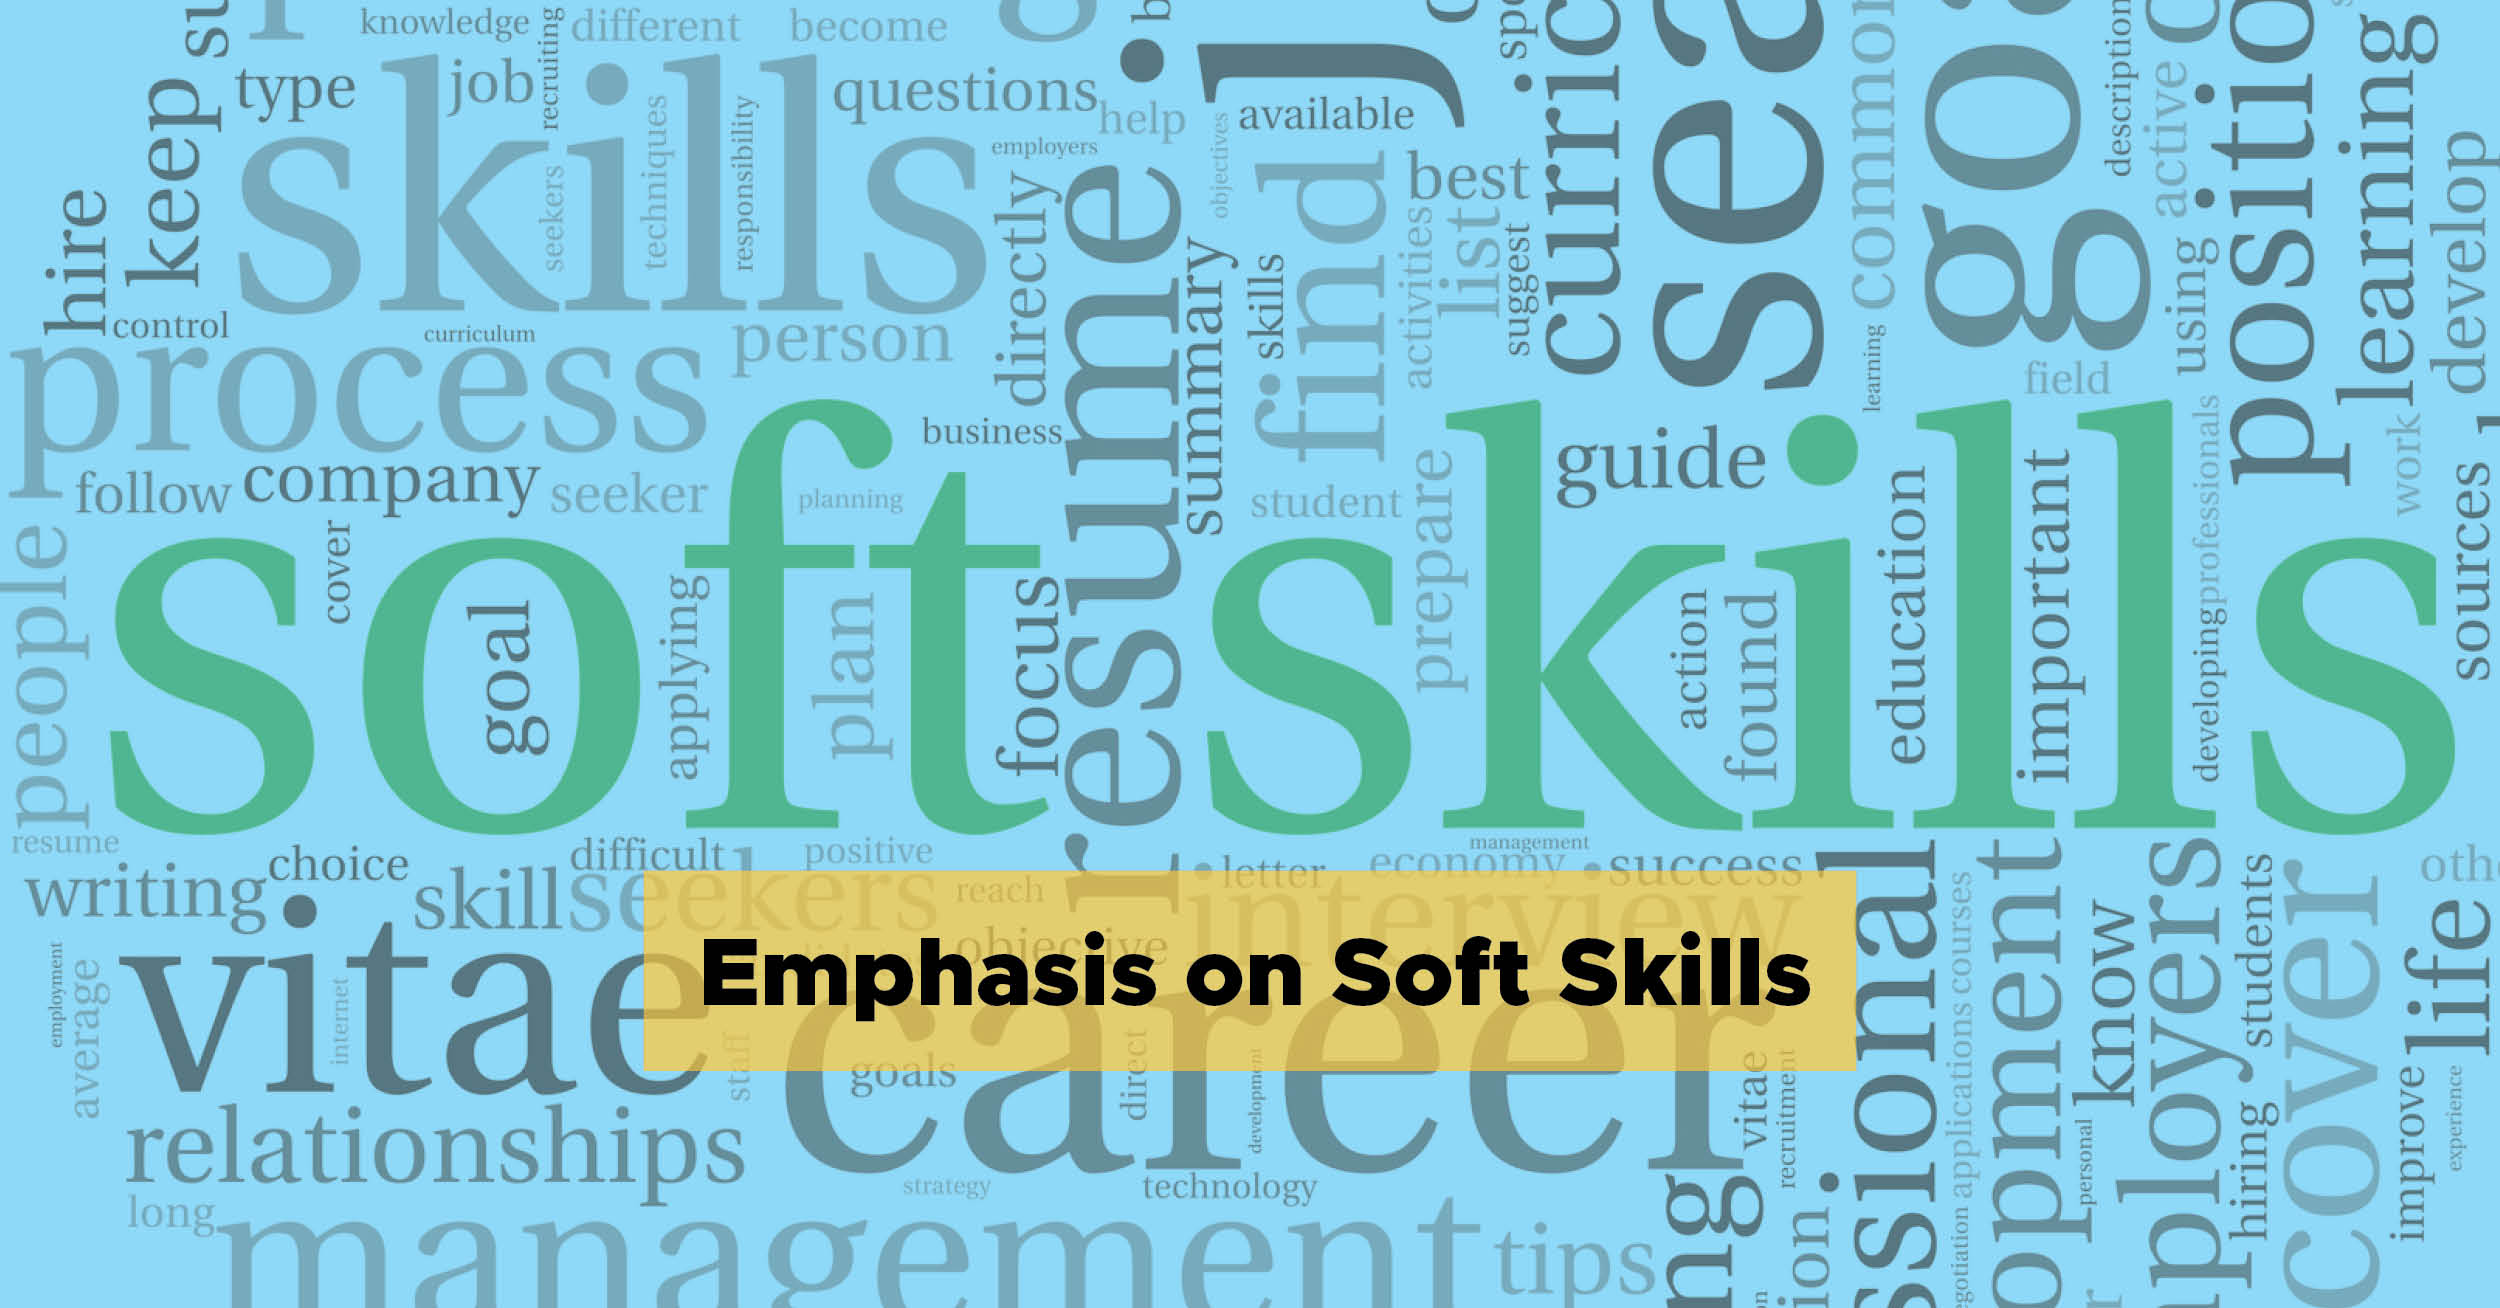 1. Emphasis on Soft Skills